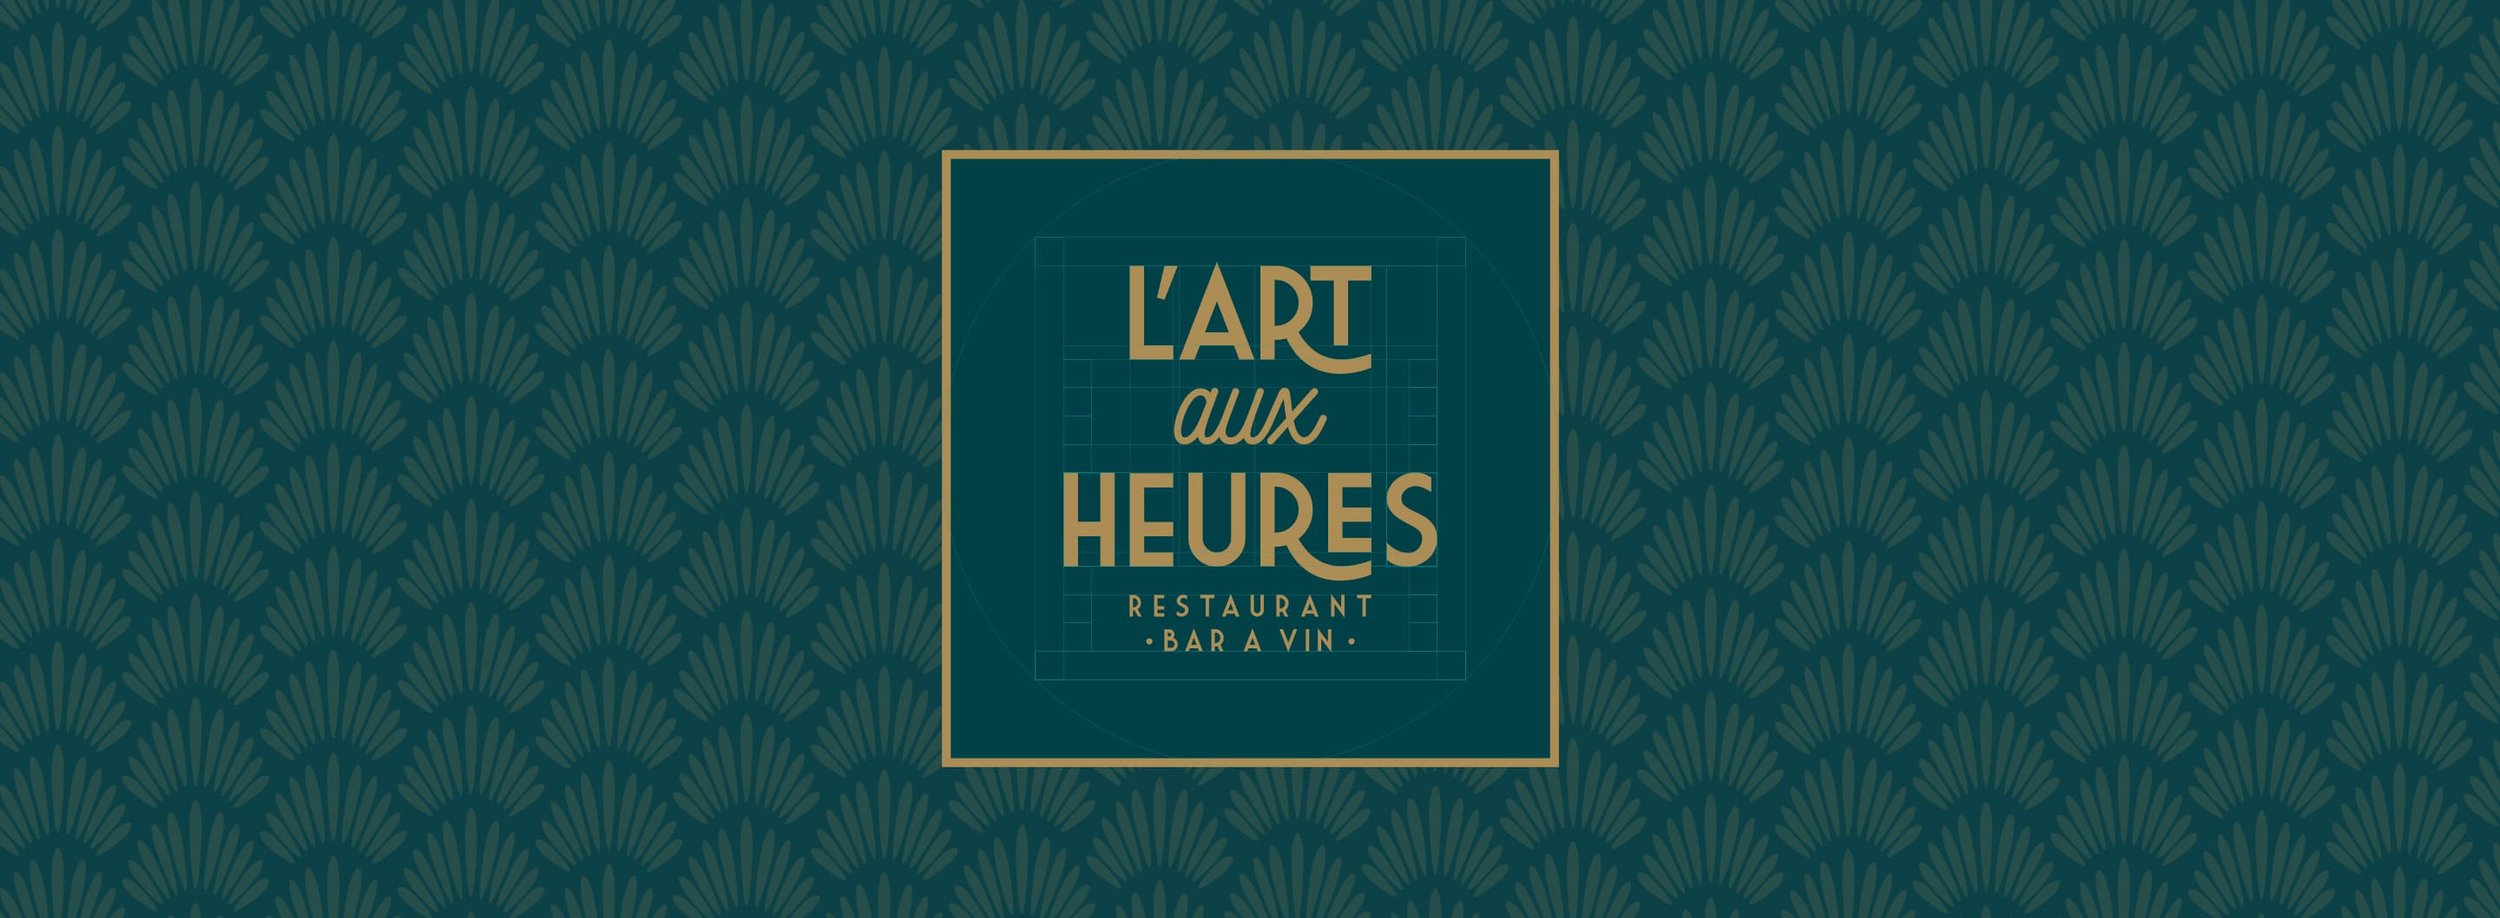 4-restaurant-lart-aux-heures_logo-final-choisi.jpg